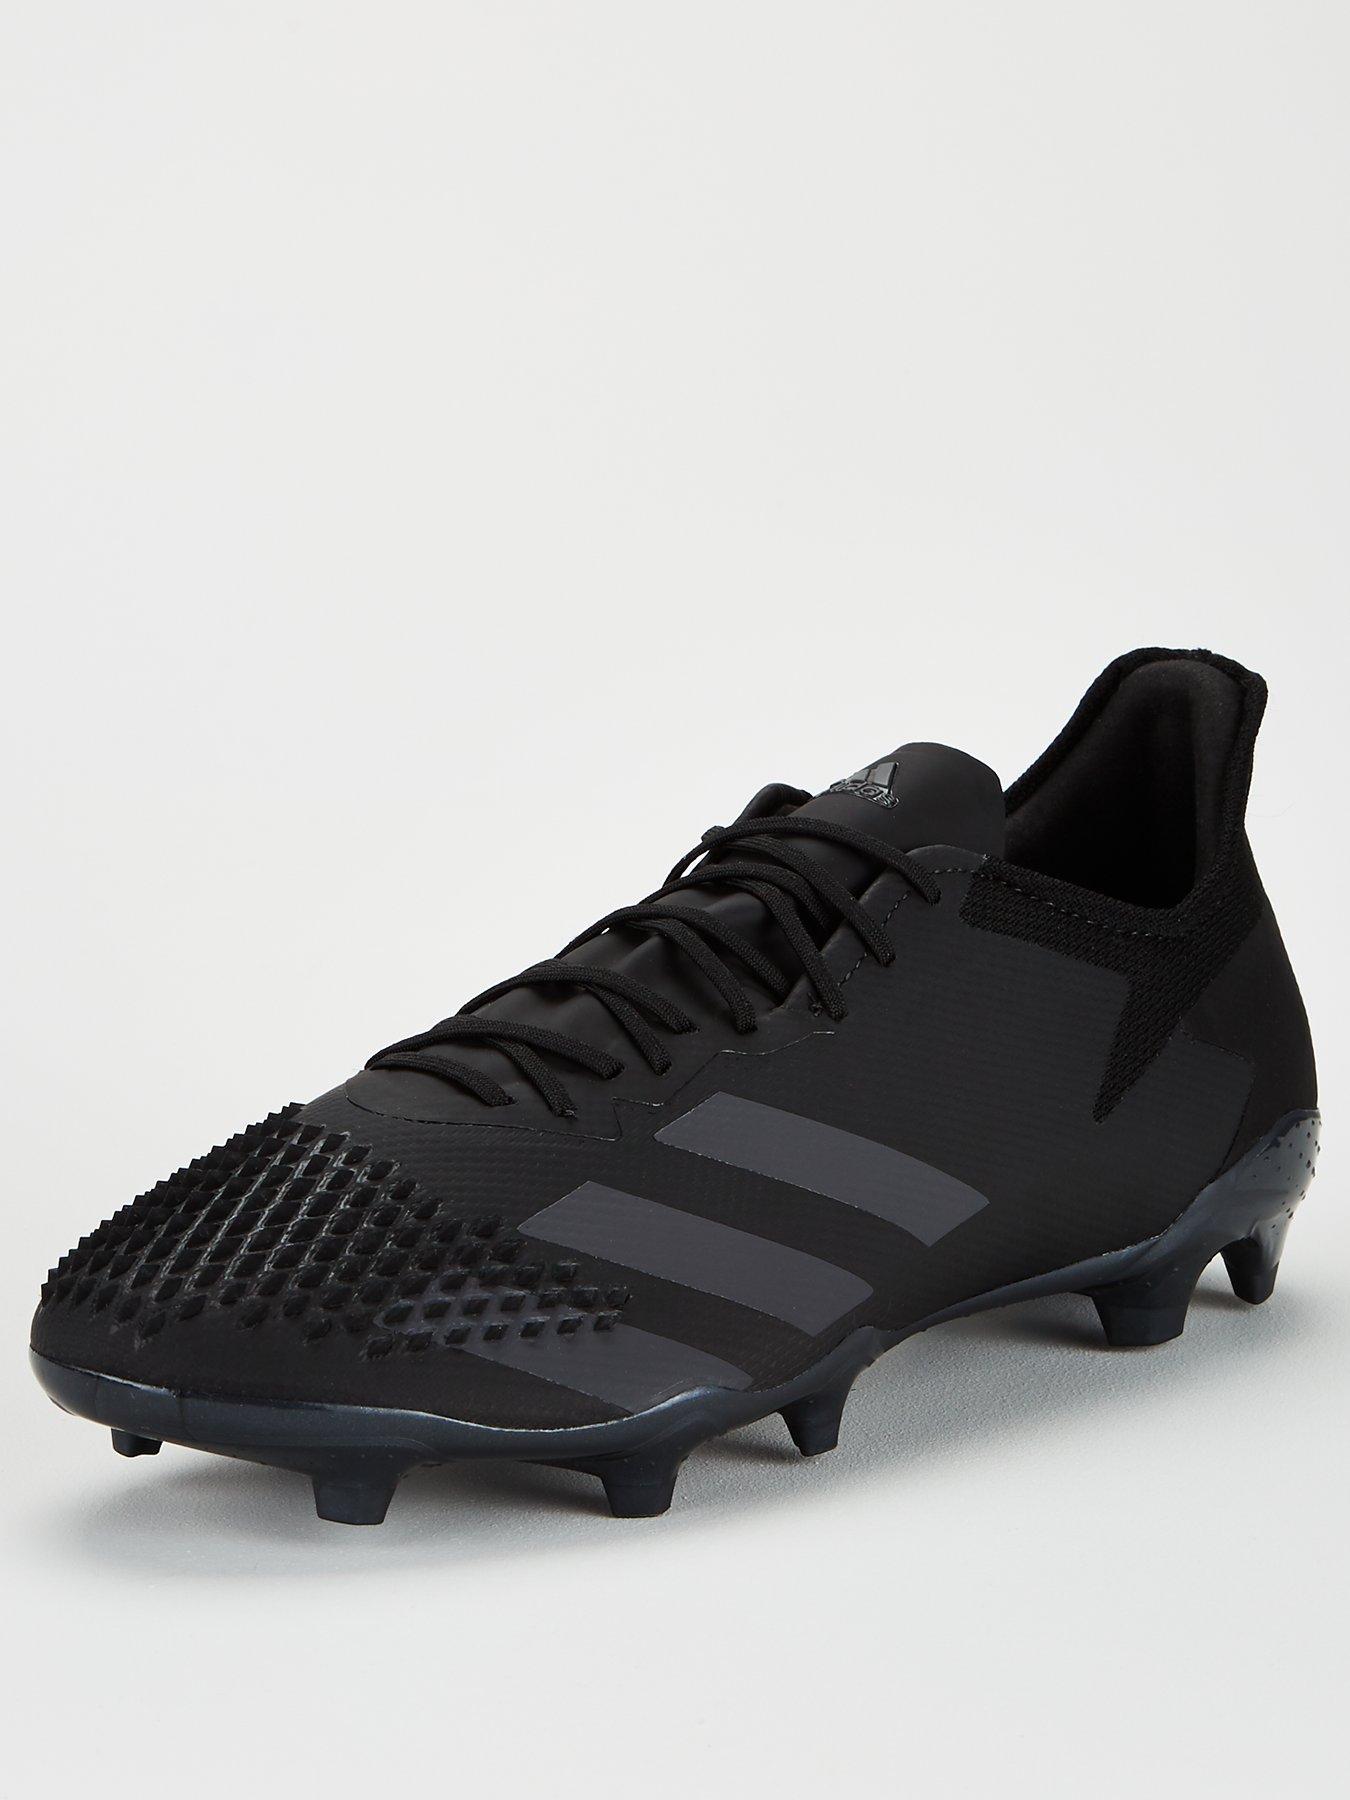 adidas predator black football boots